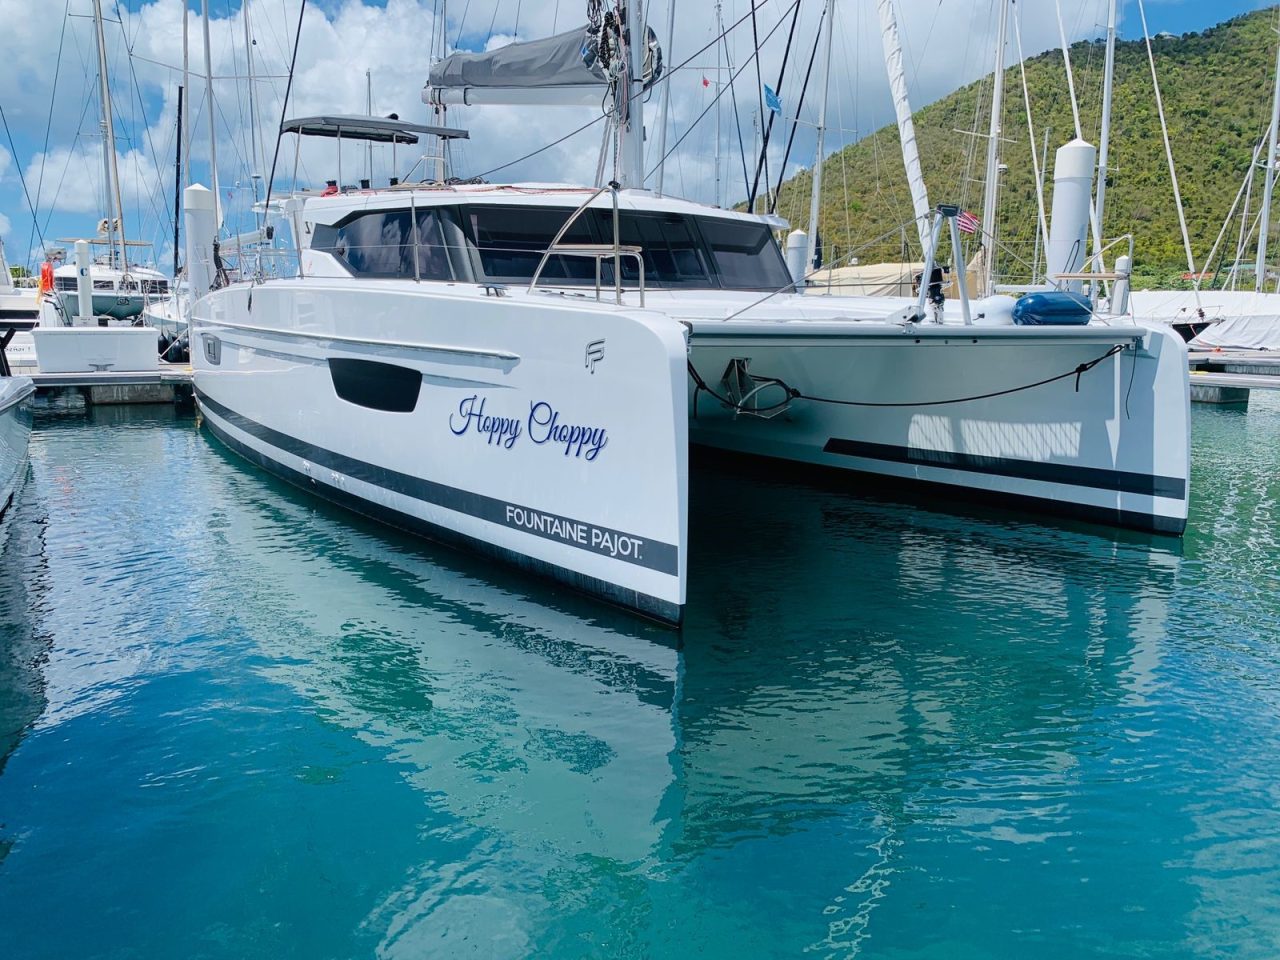 Hoppy Choppy Bareboat Charter in British Virgin Islands